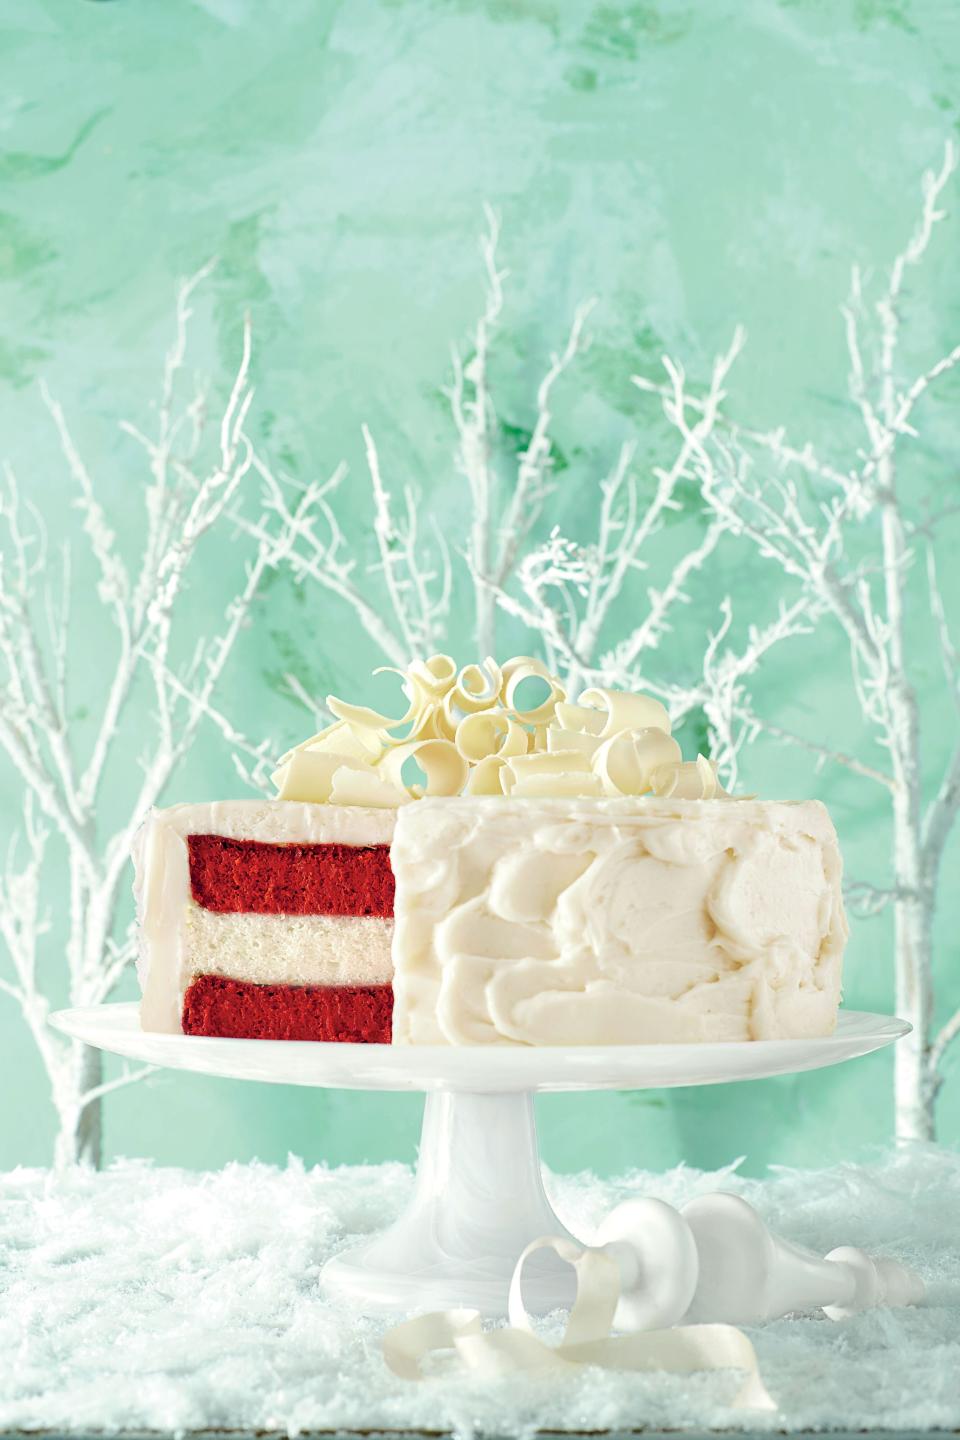 Red Velvet Cheesecake-Vanilla Cake with Cream Cheese Frosting